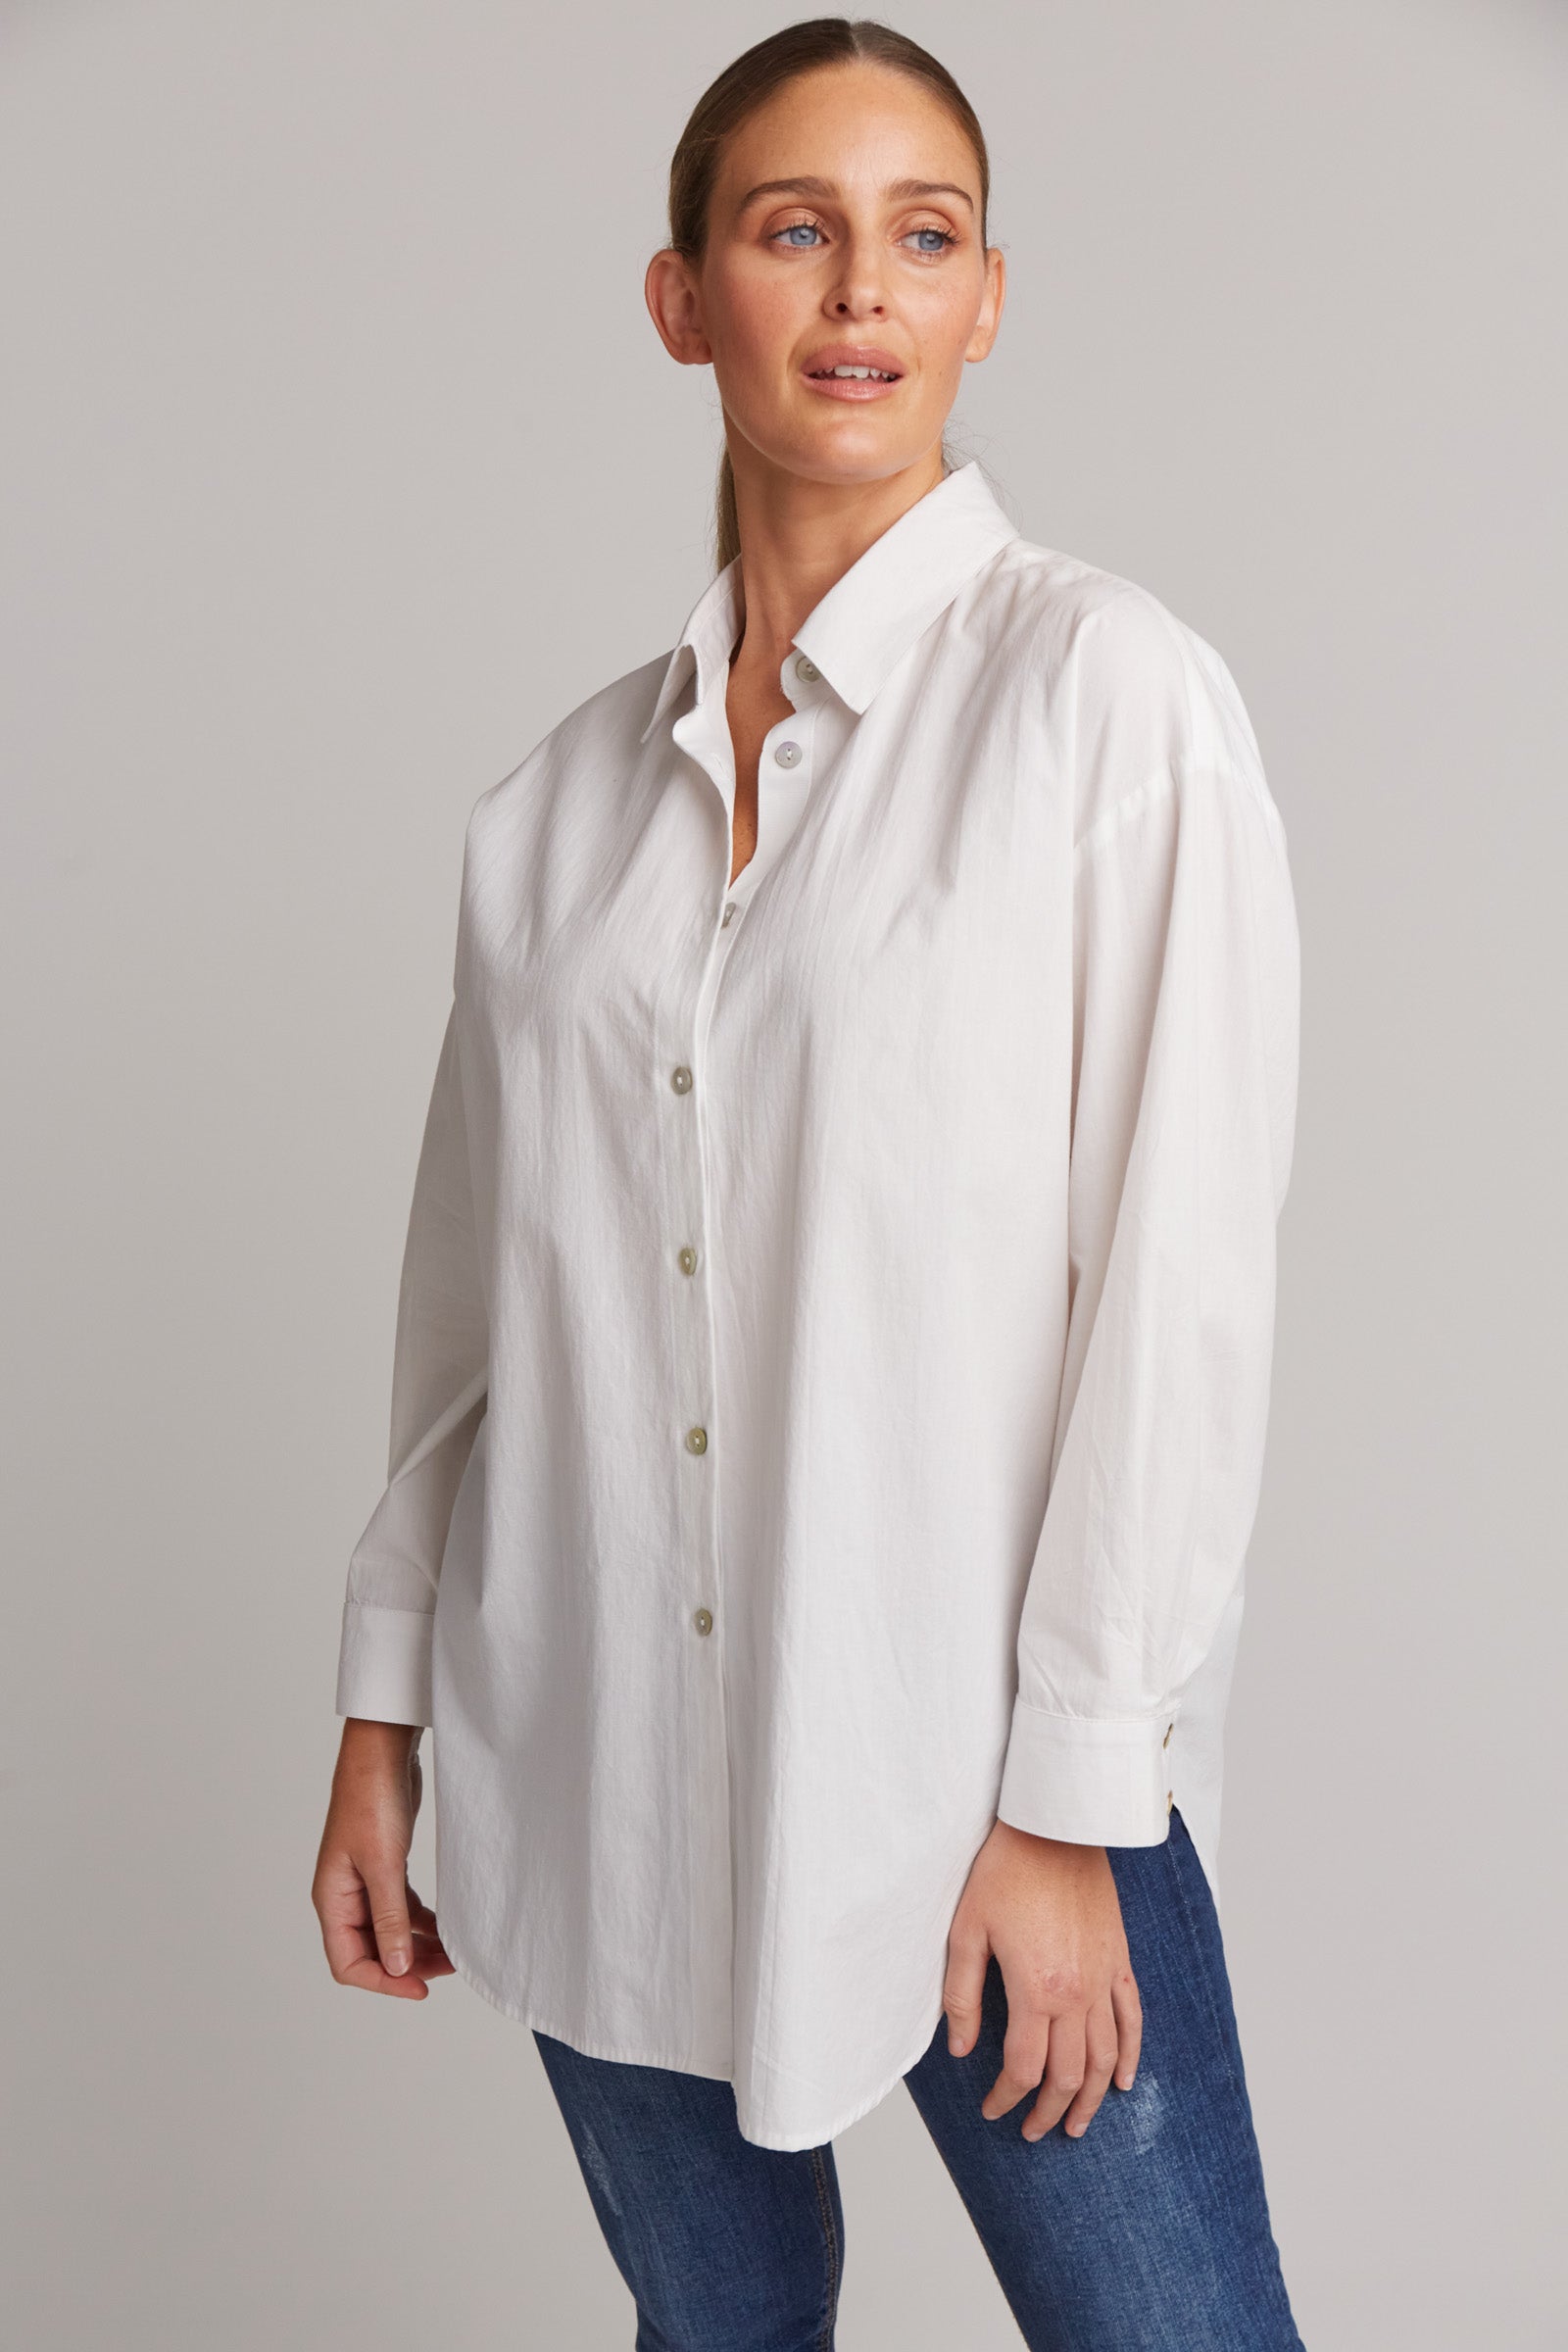 Studio Oversize Shirt - Salt - eb&ive Clothing - Shirt L/S